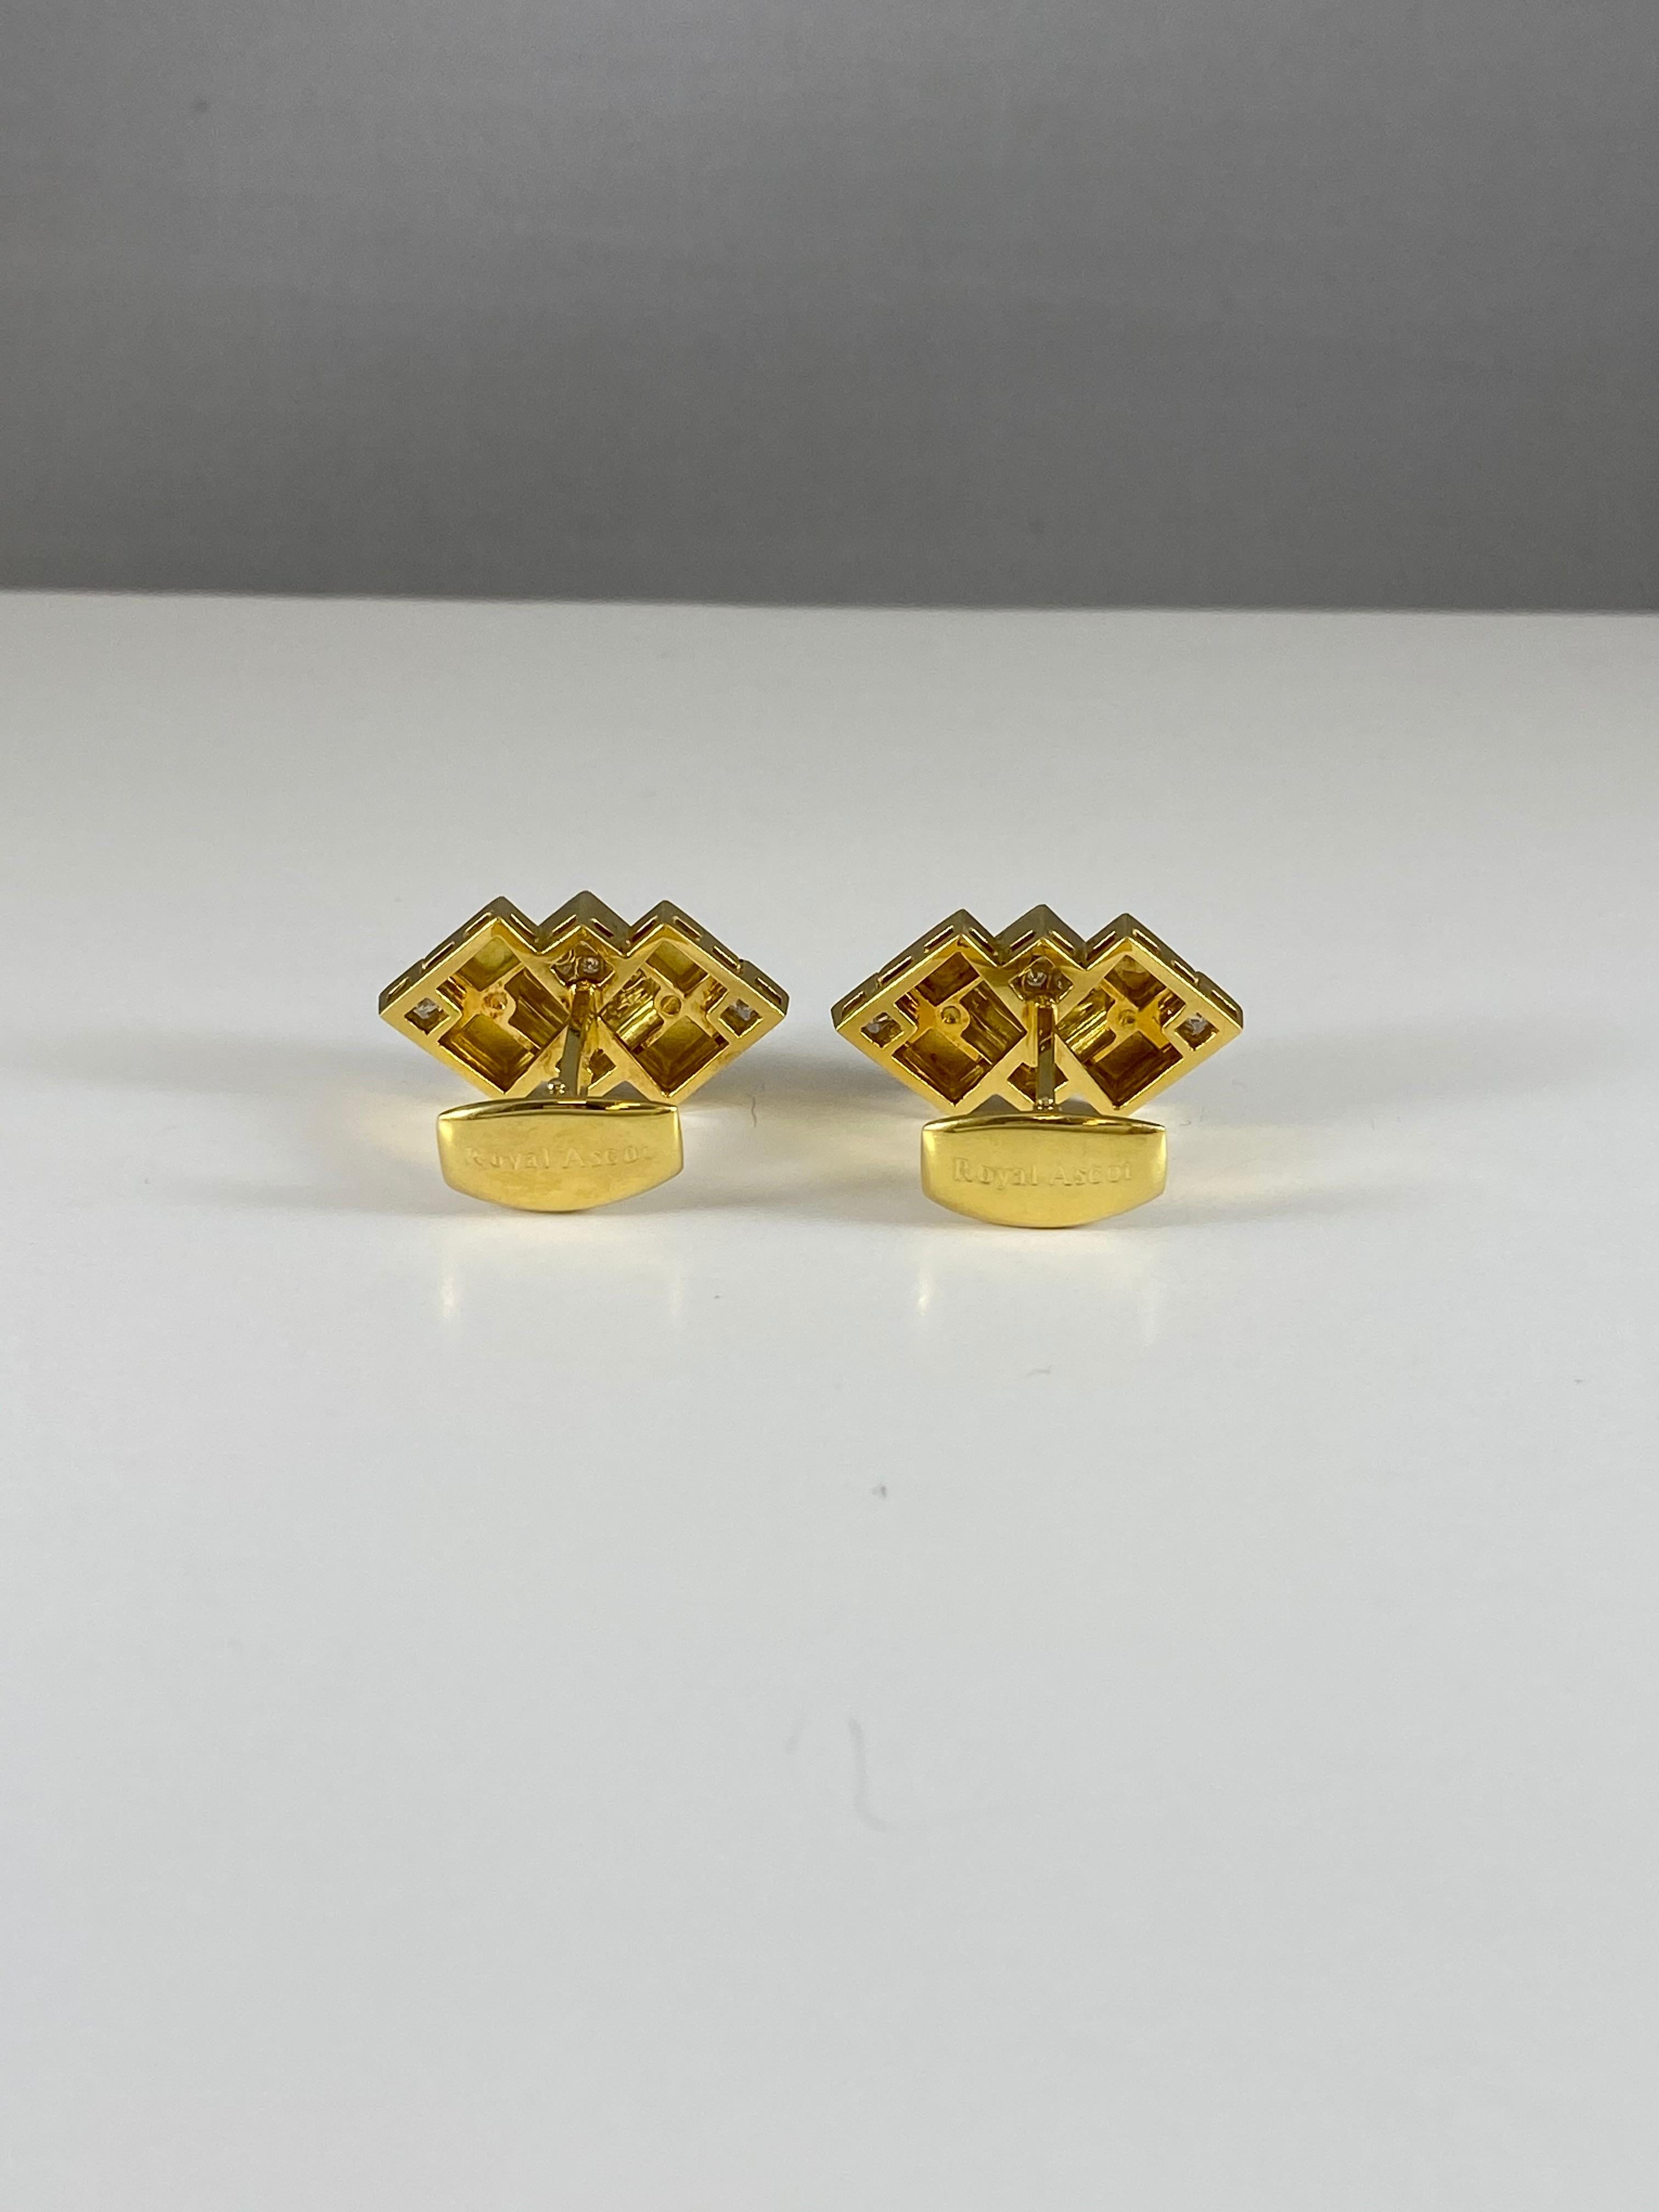 Round Cut Royal Ascot Diamond Art Deco Style Cufflinks For Sale